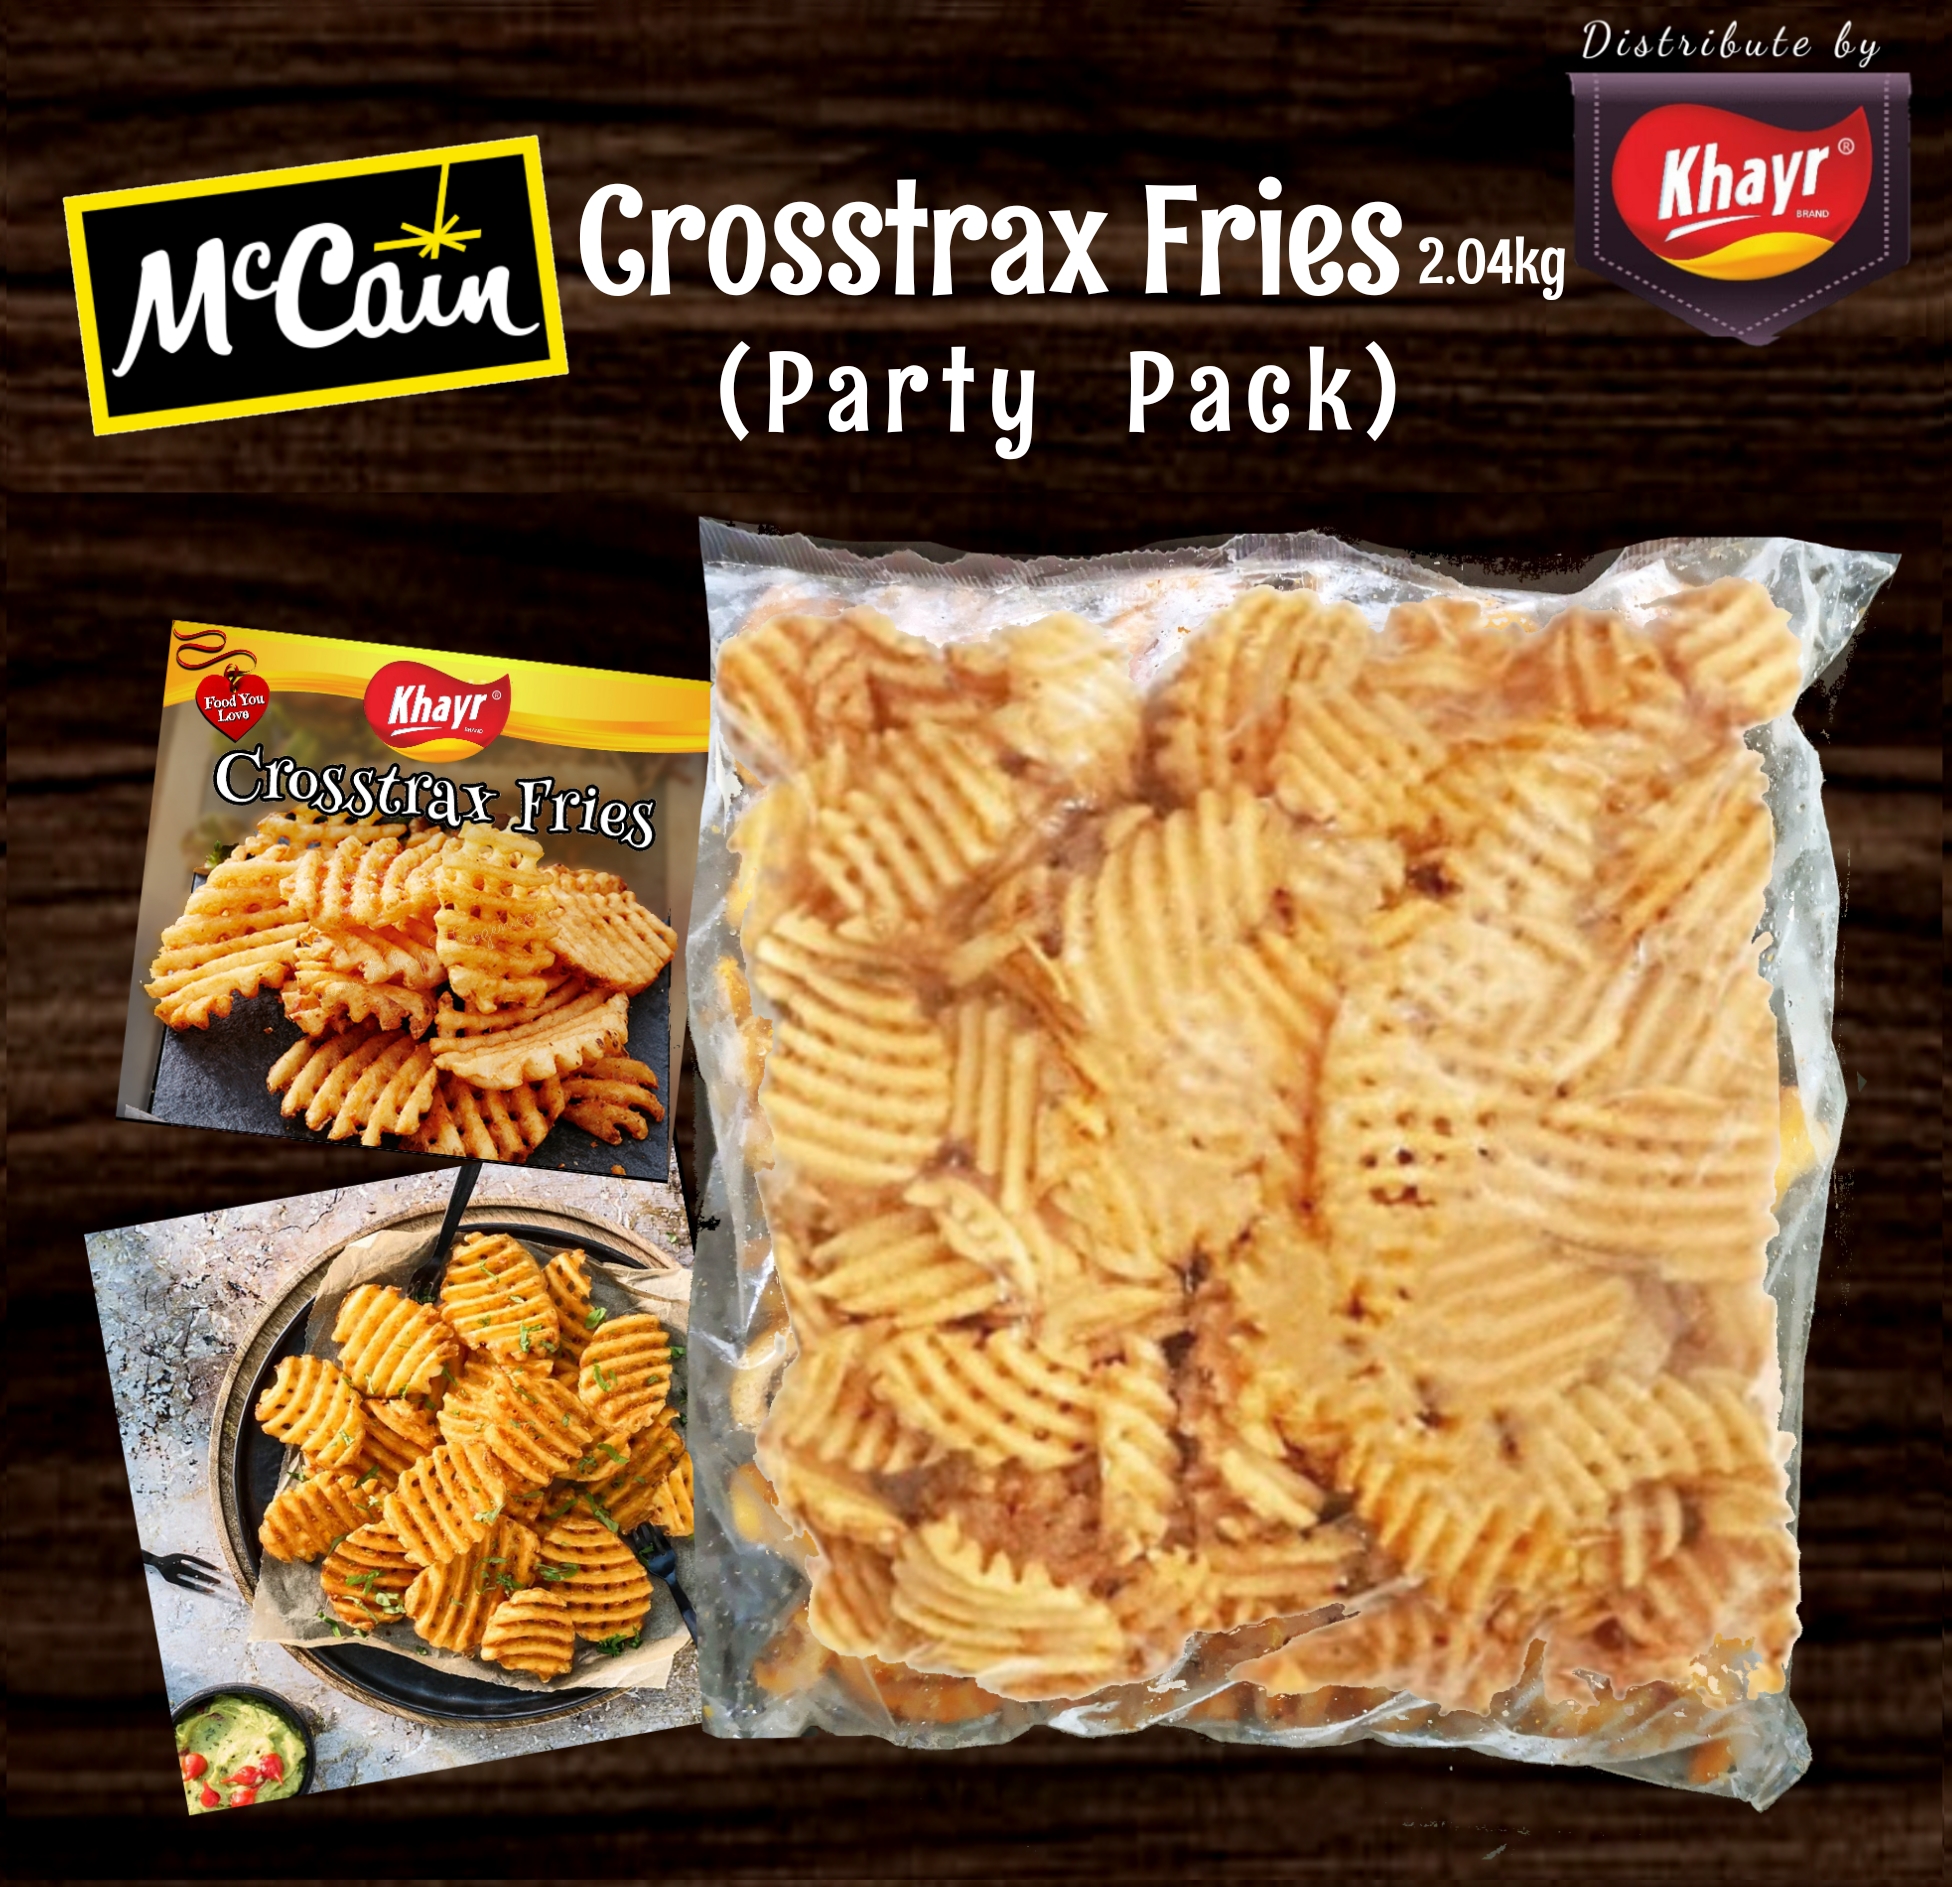 McCain Crosstrax Fries Party Pack (2.04kg)